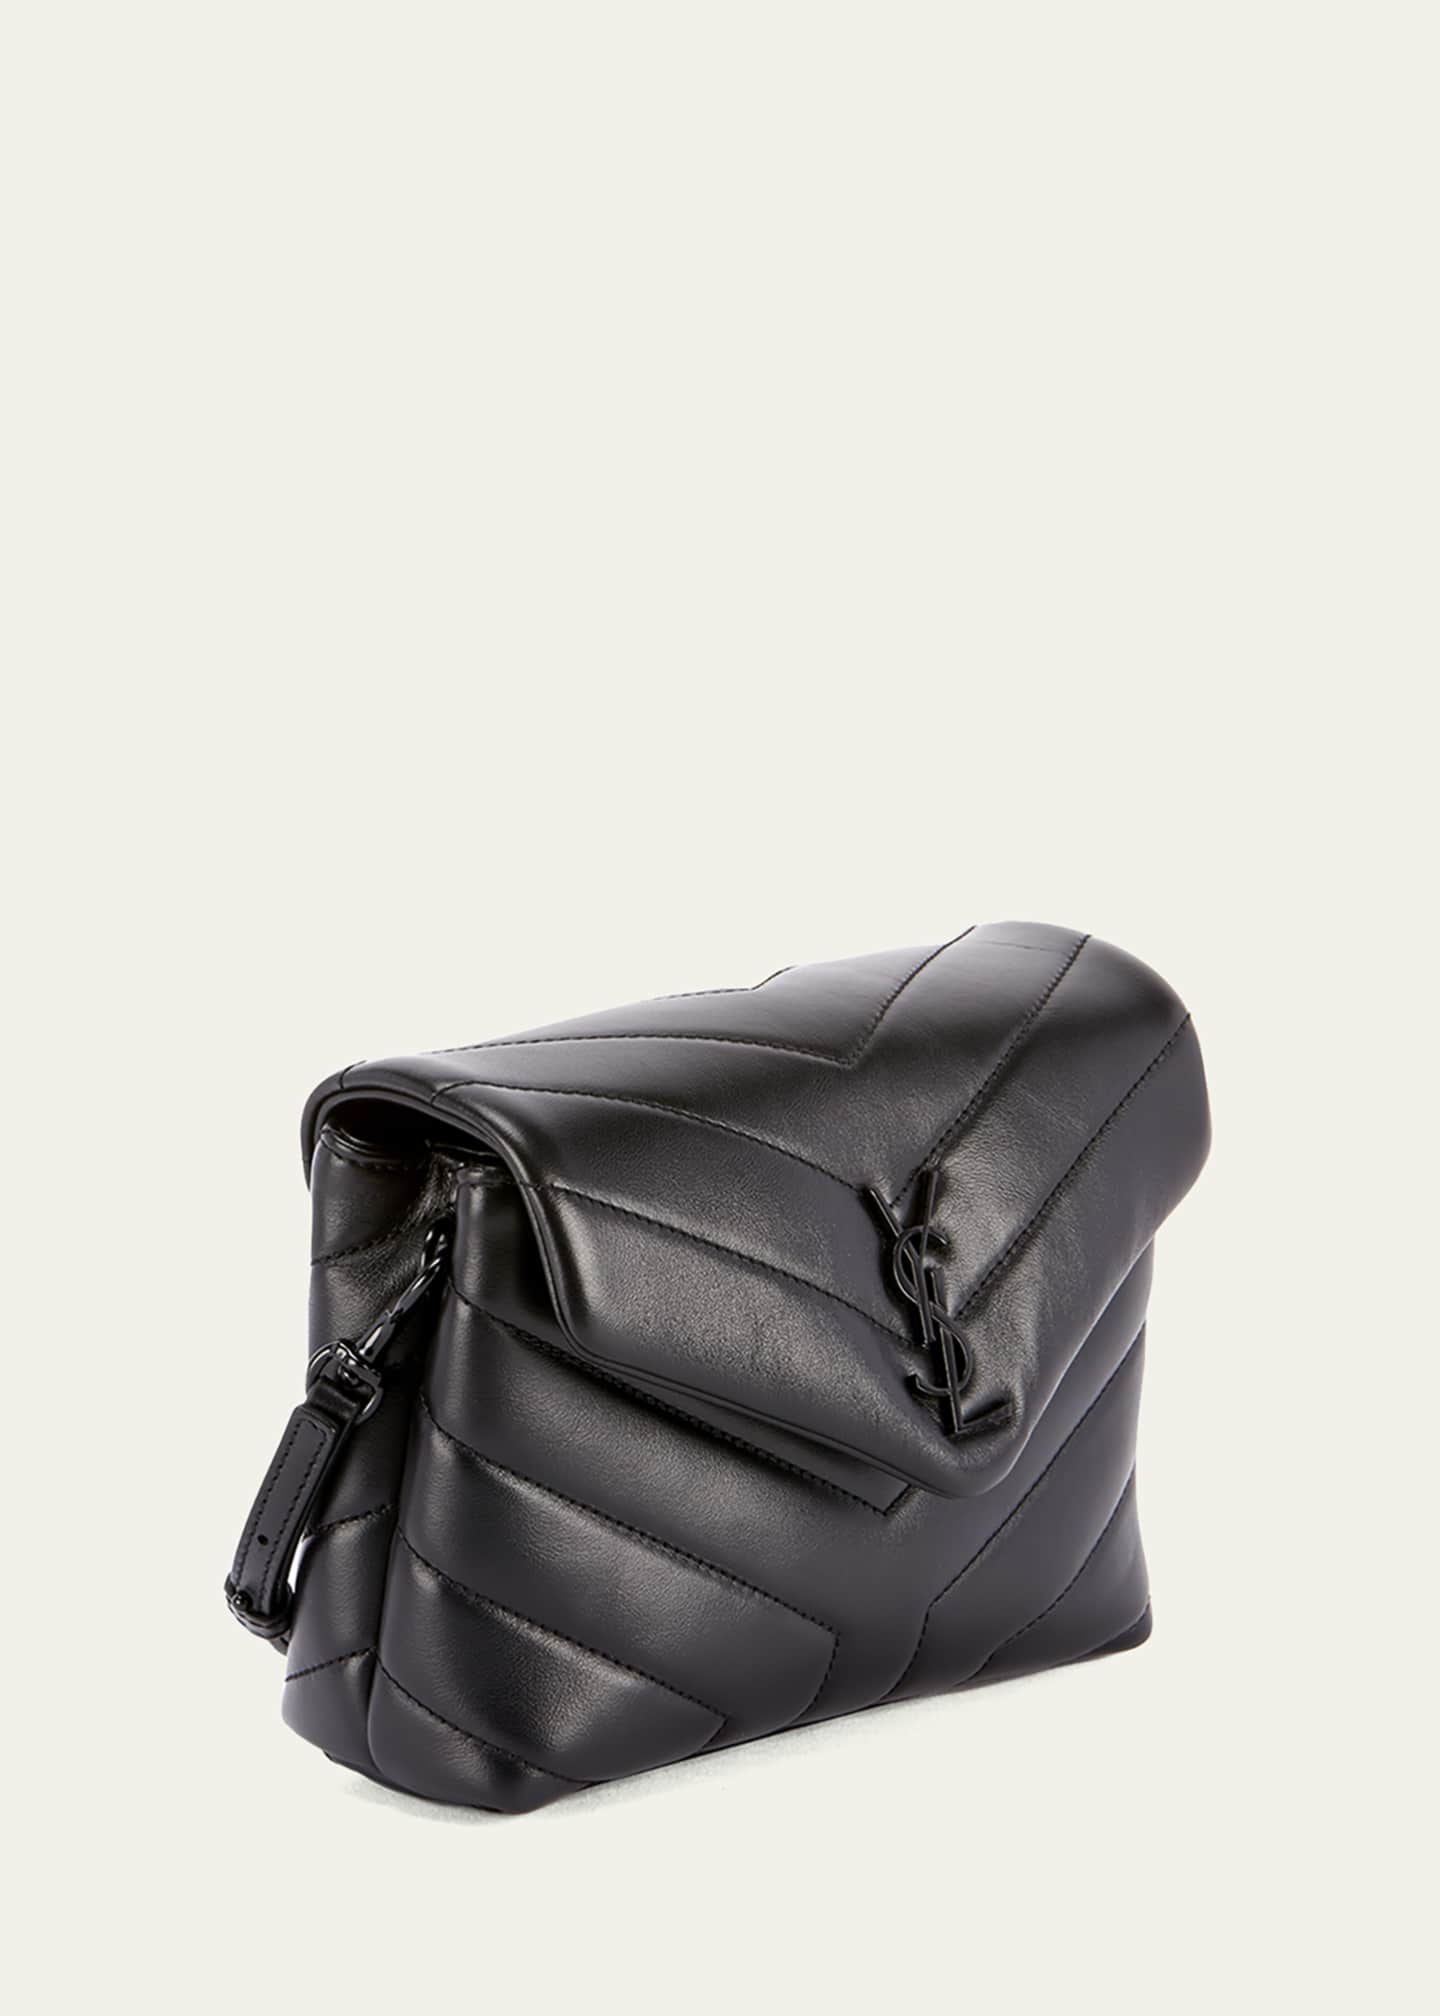 Black Loulou Toy quilted-leather shoulder bag, Saint Laurent